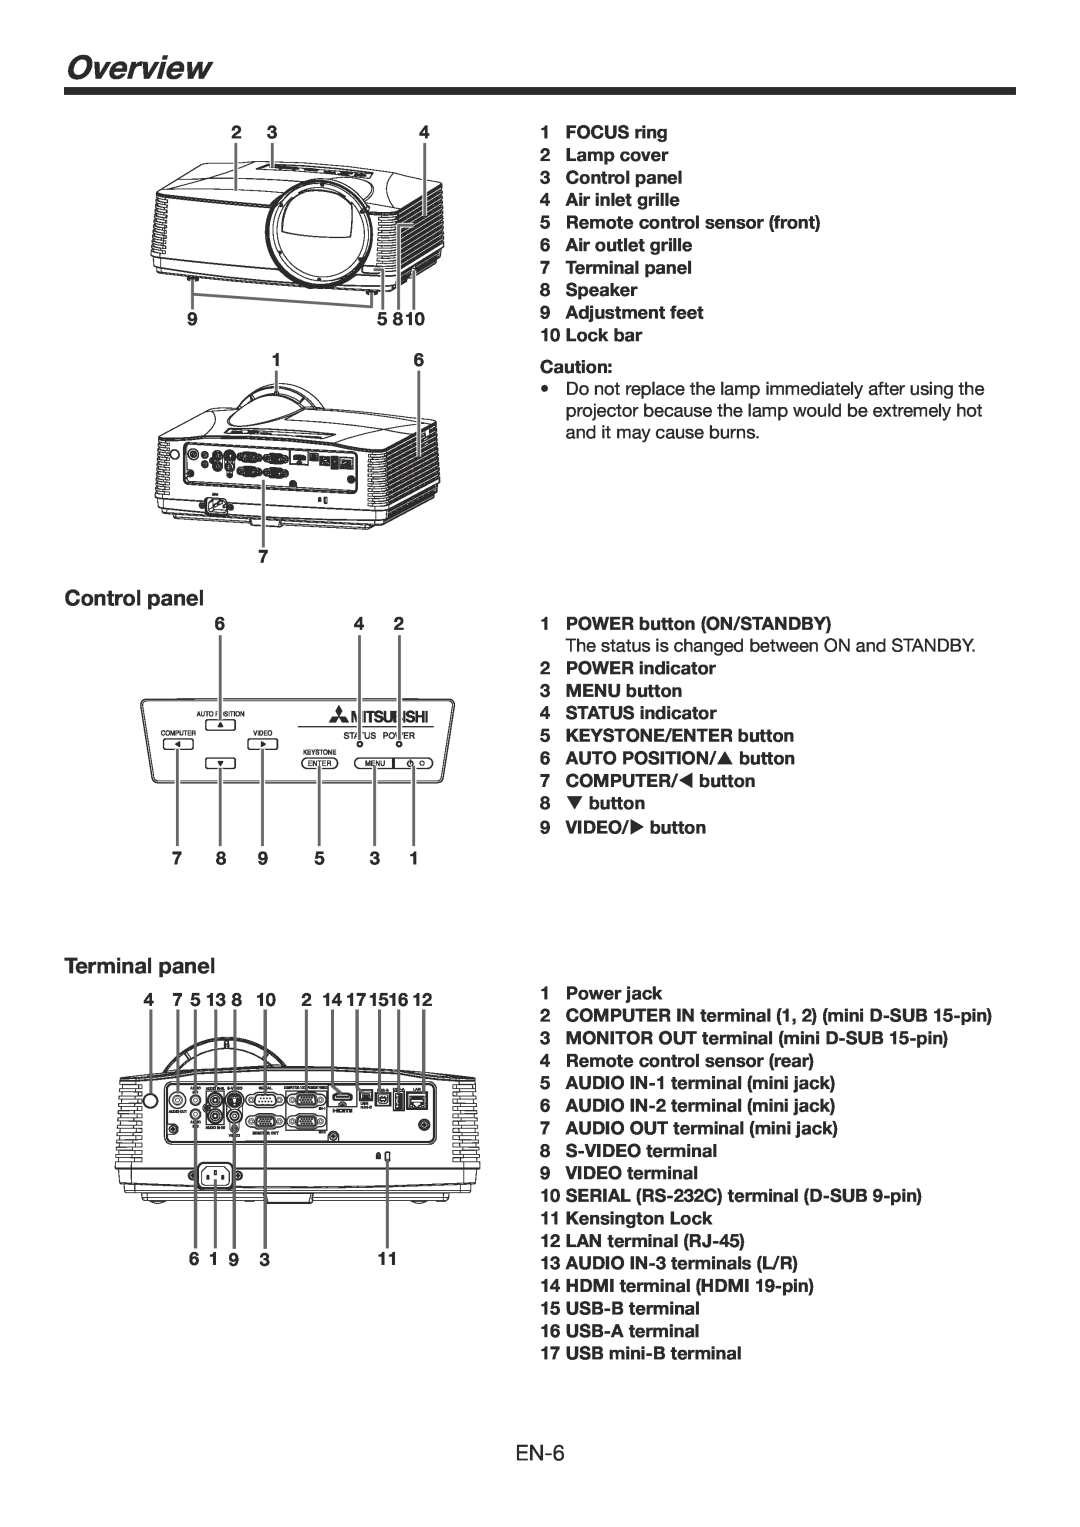 Mitsubishi Electronics WD385U-EST Overview, Control panel, Terminal panel, Speaker 9 Adjustment feet 10 Lock bar, 7 5 13 